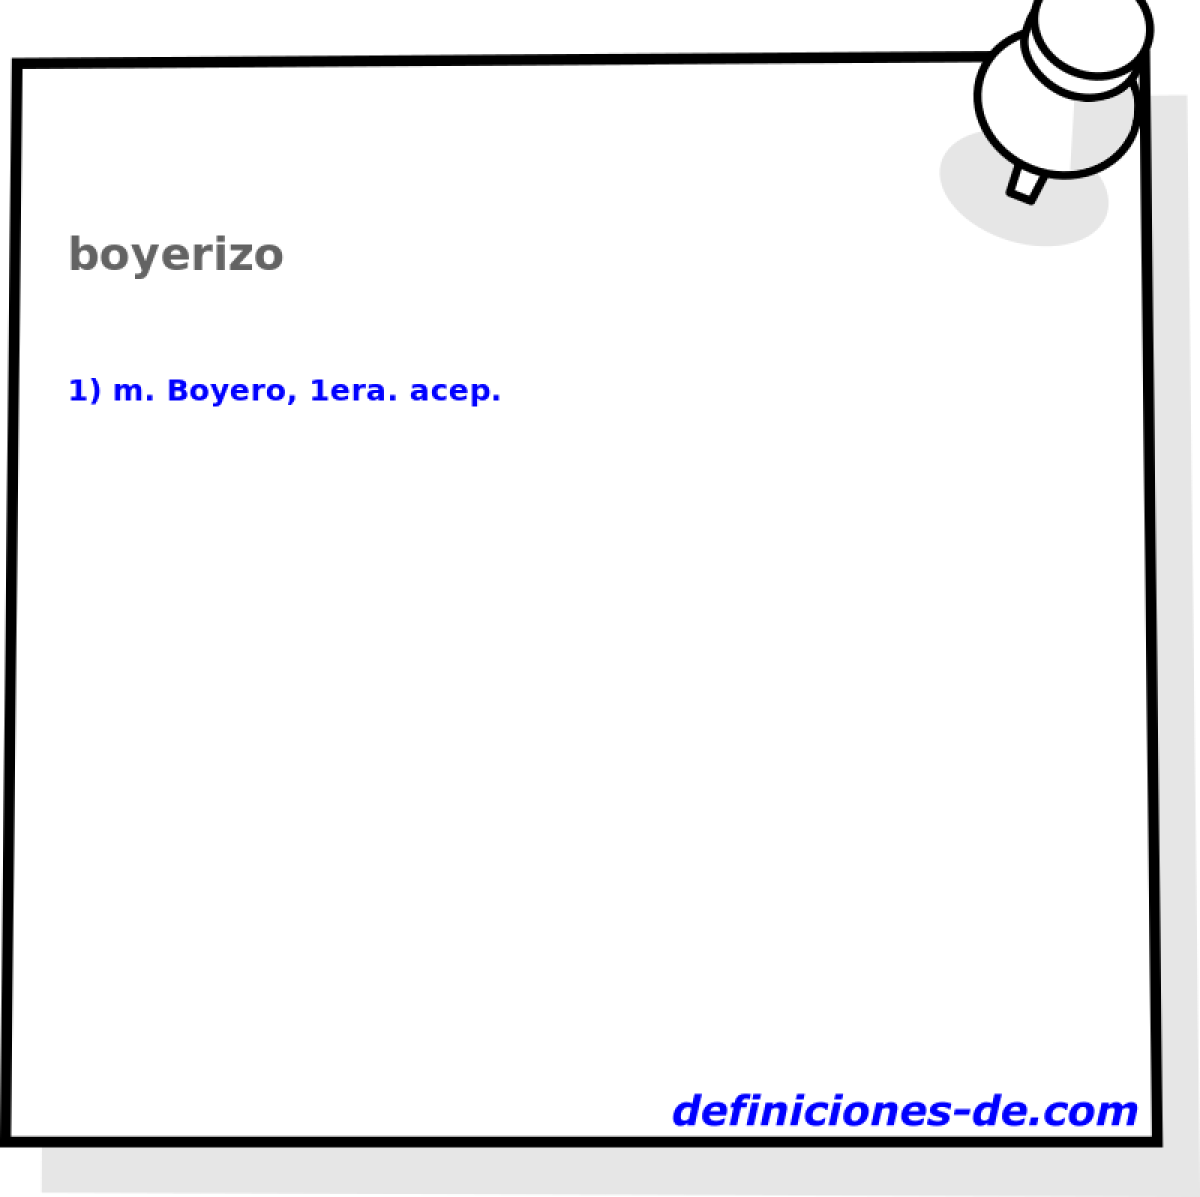 boyerizo 